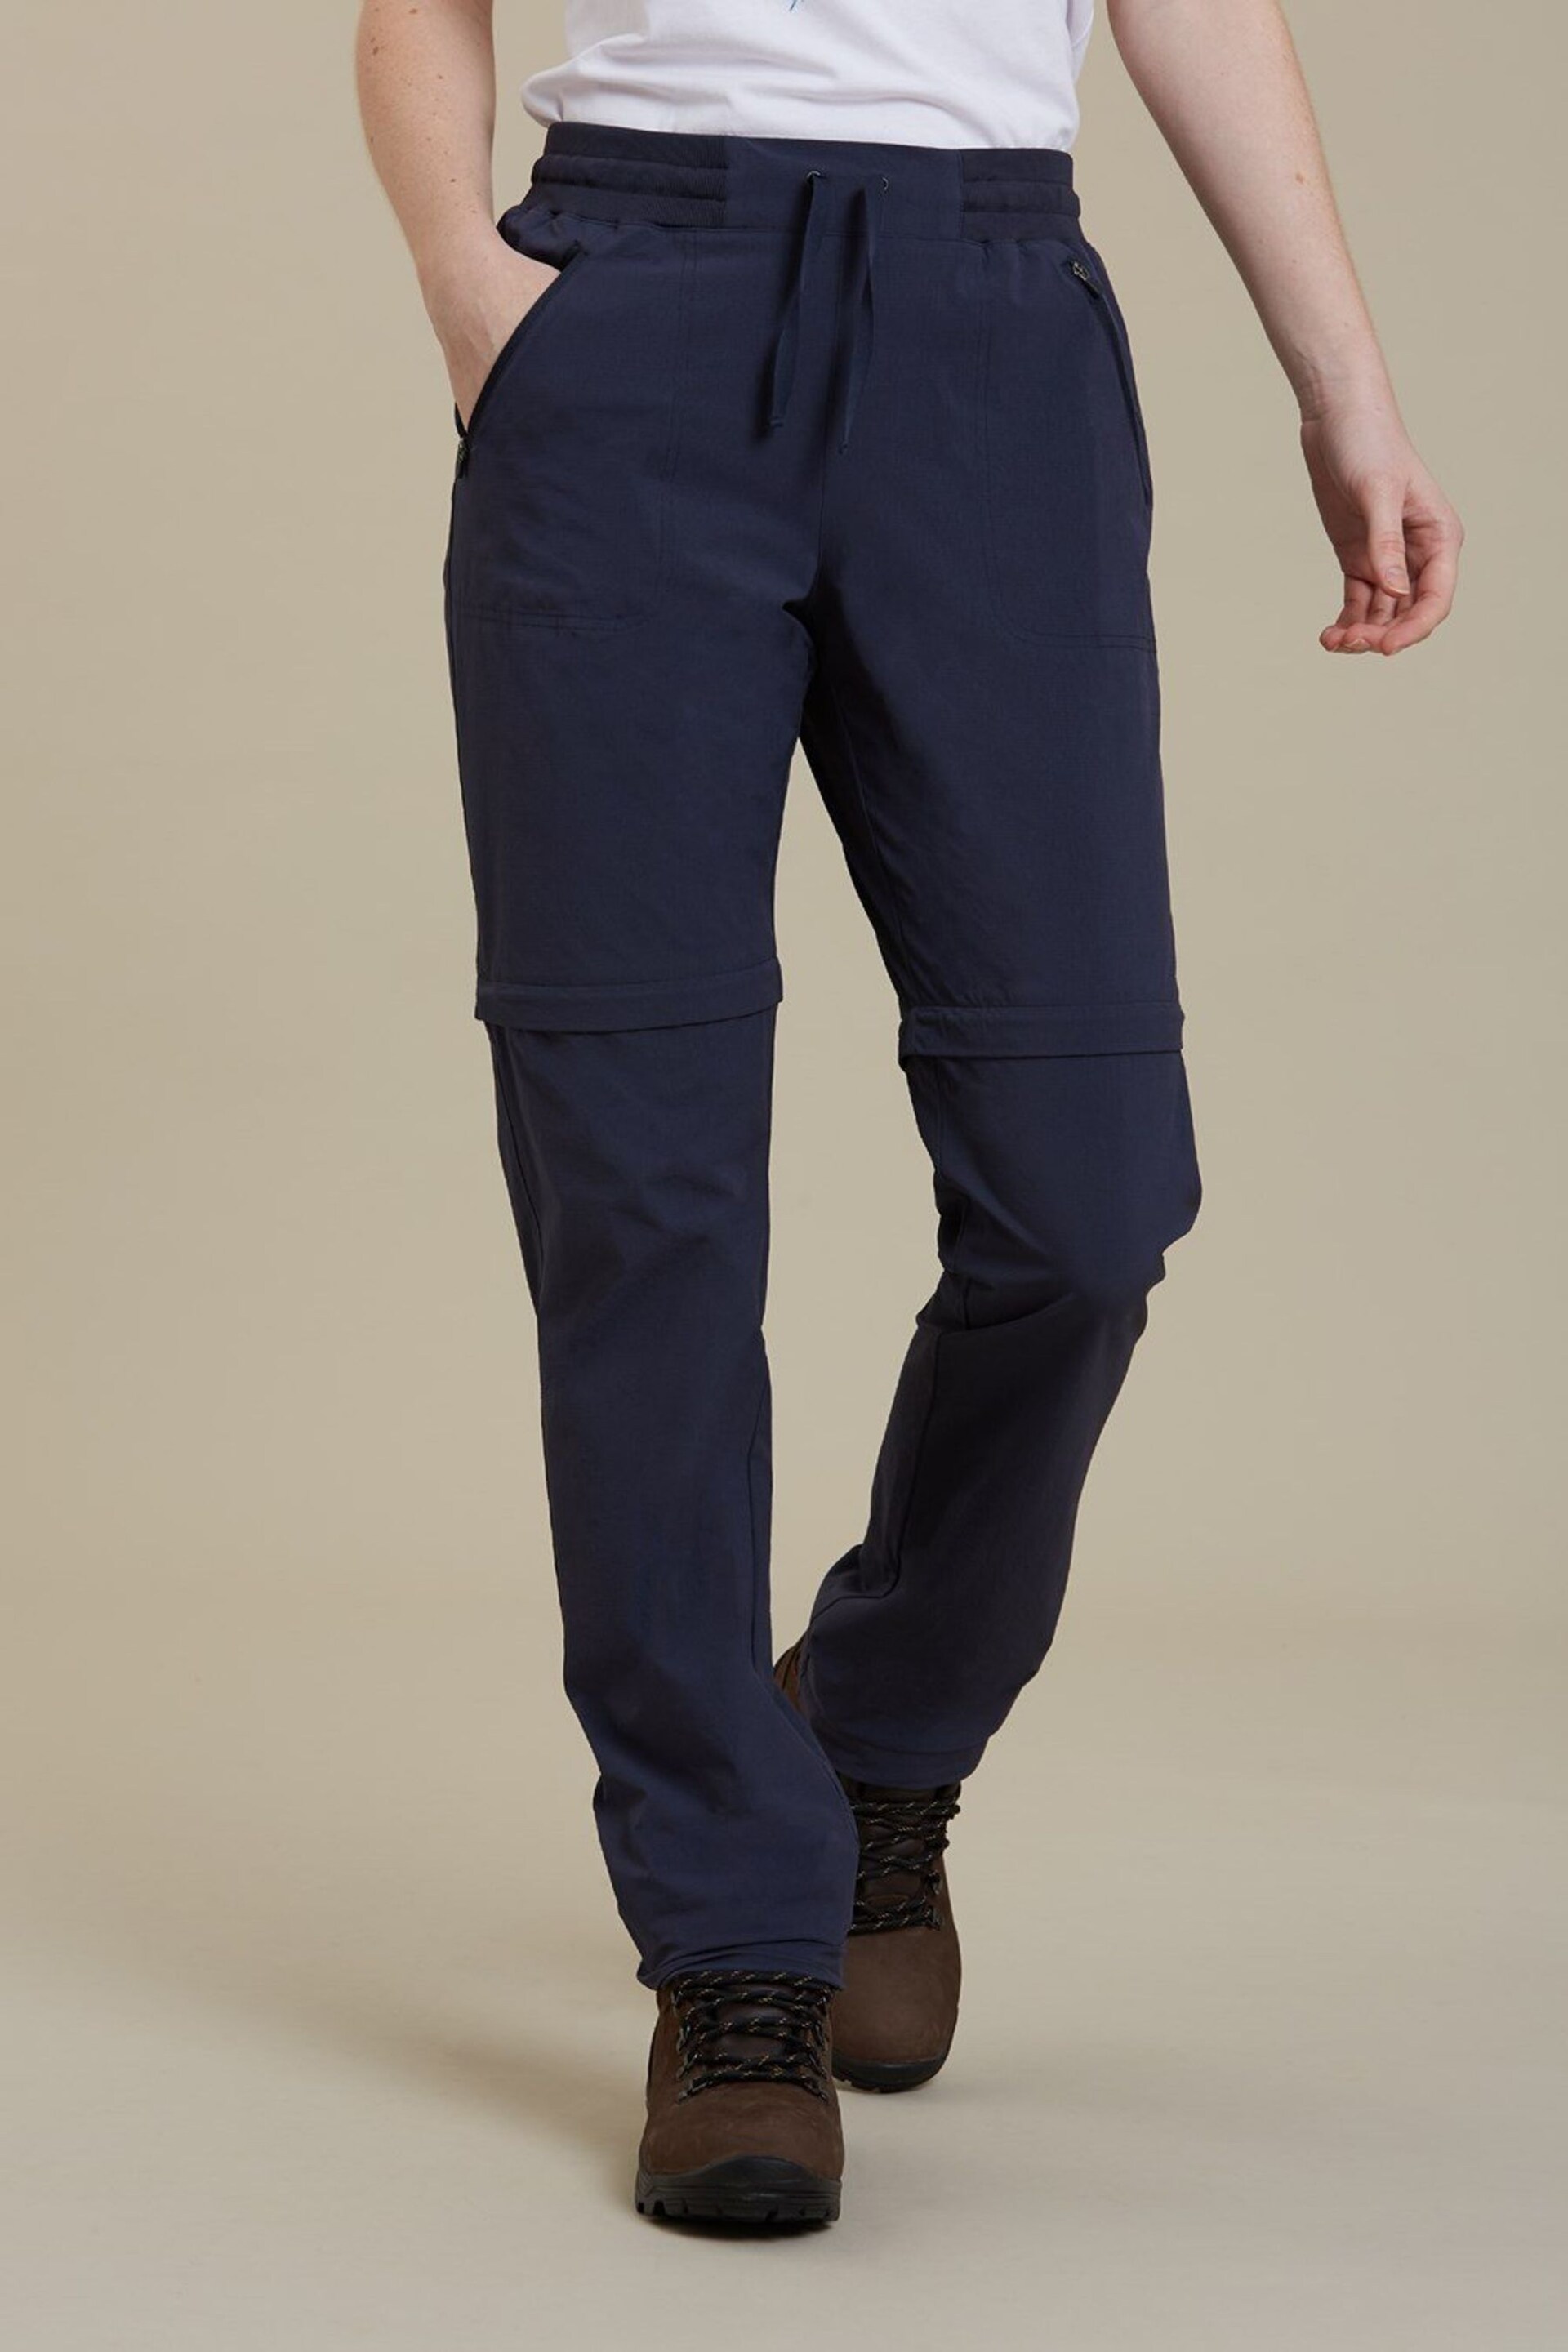 Mountain Warehouse Blue Explorer Womens Zip-Off Convertible Walking Trousers - Image 1 of 4